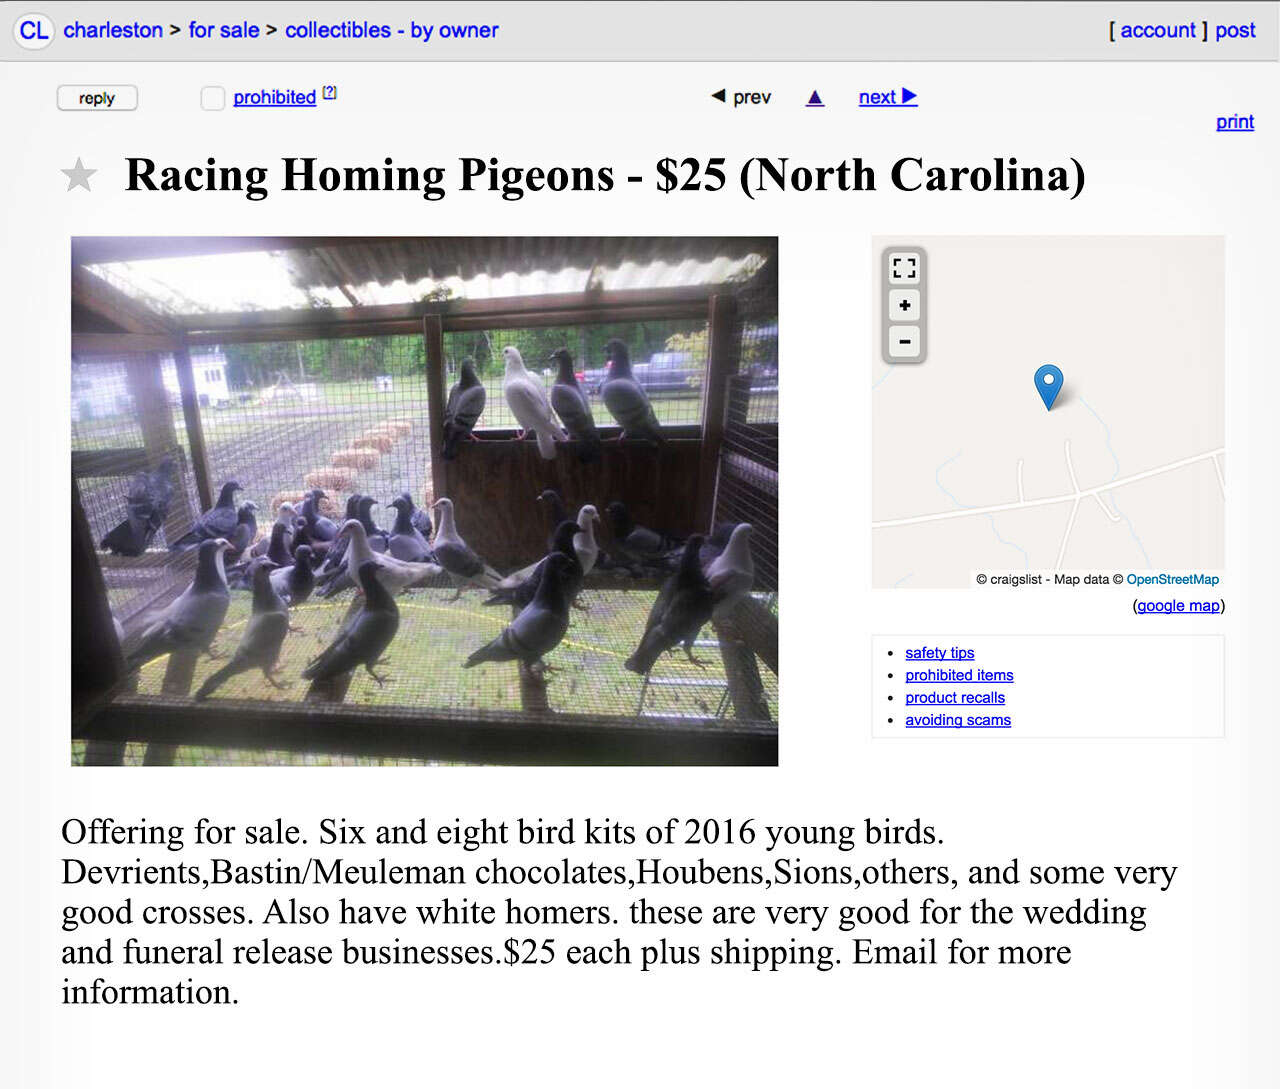 A Craigslist advertisement for racing pigeons. 